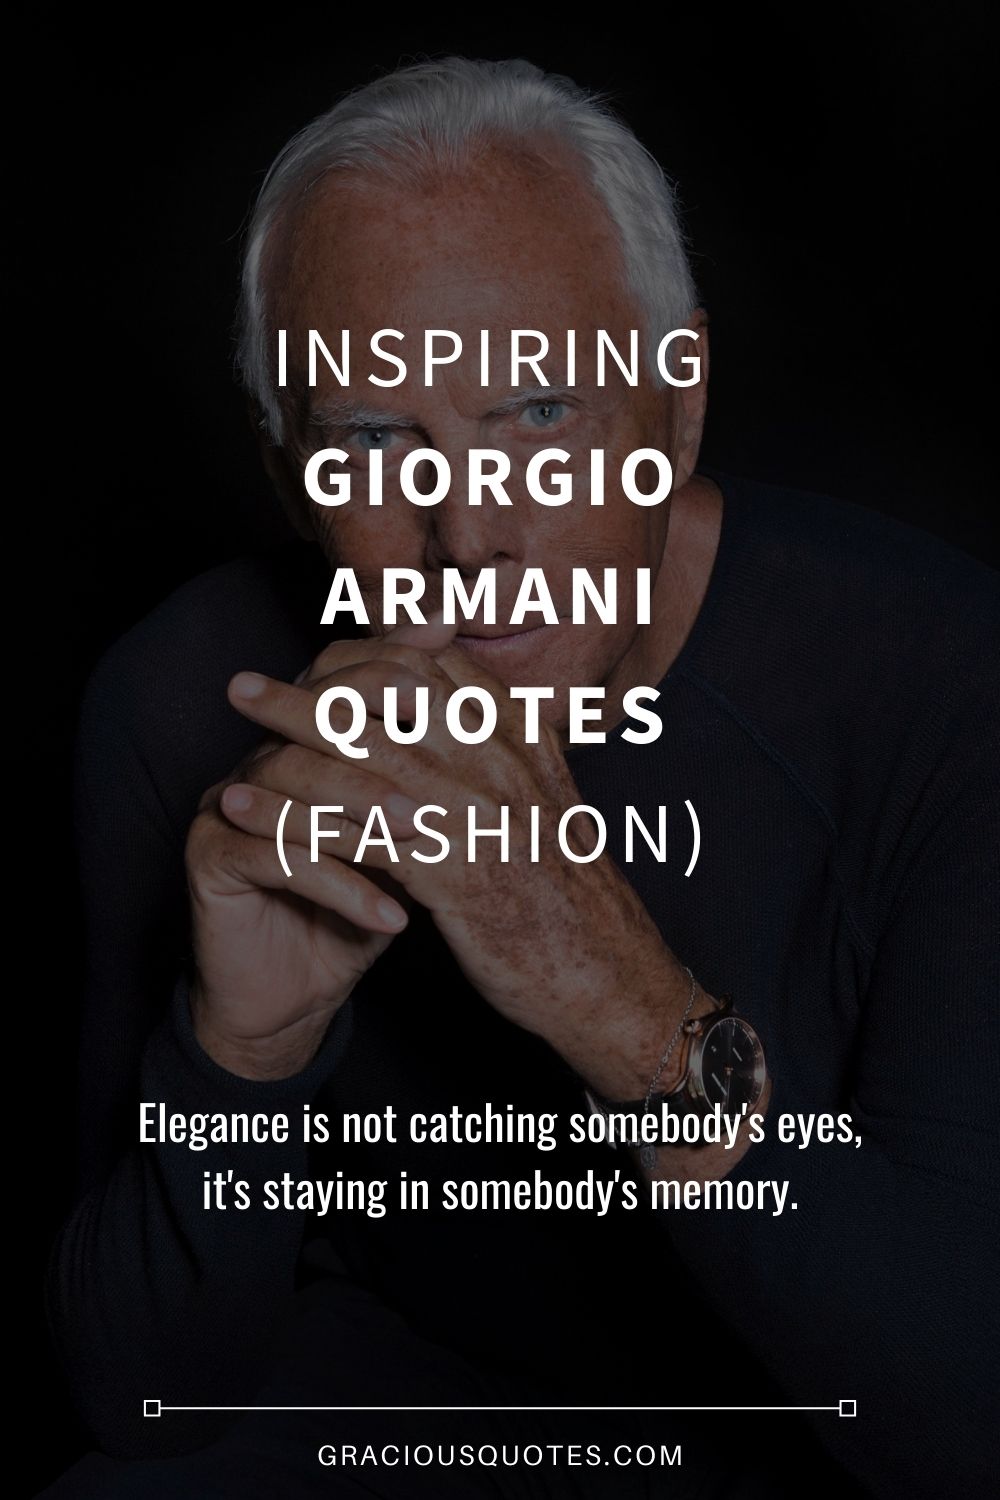 Inspiring Giorgio Armani Quotes (FASHION) - Gracious Quotes